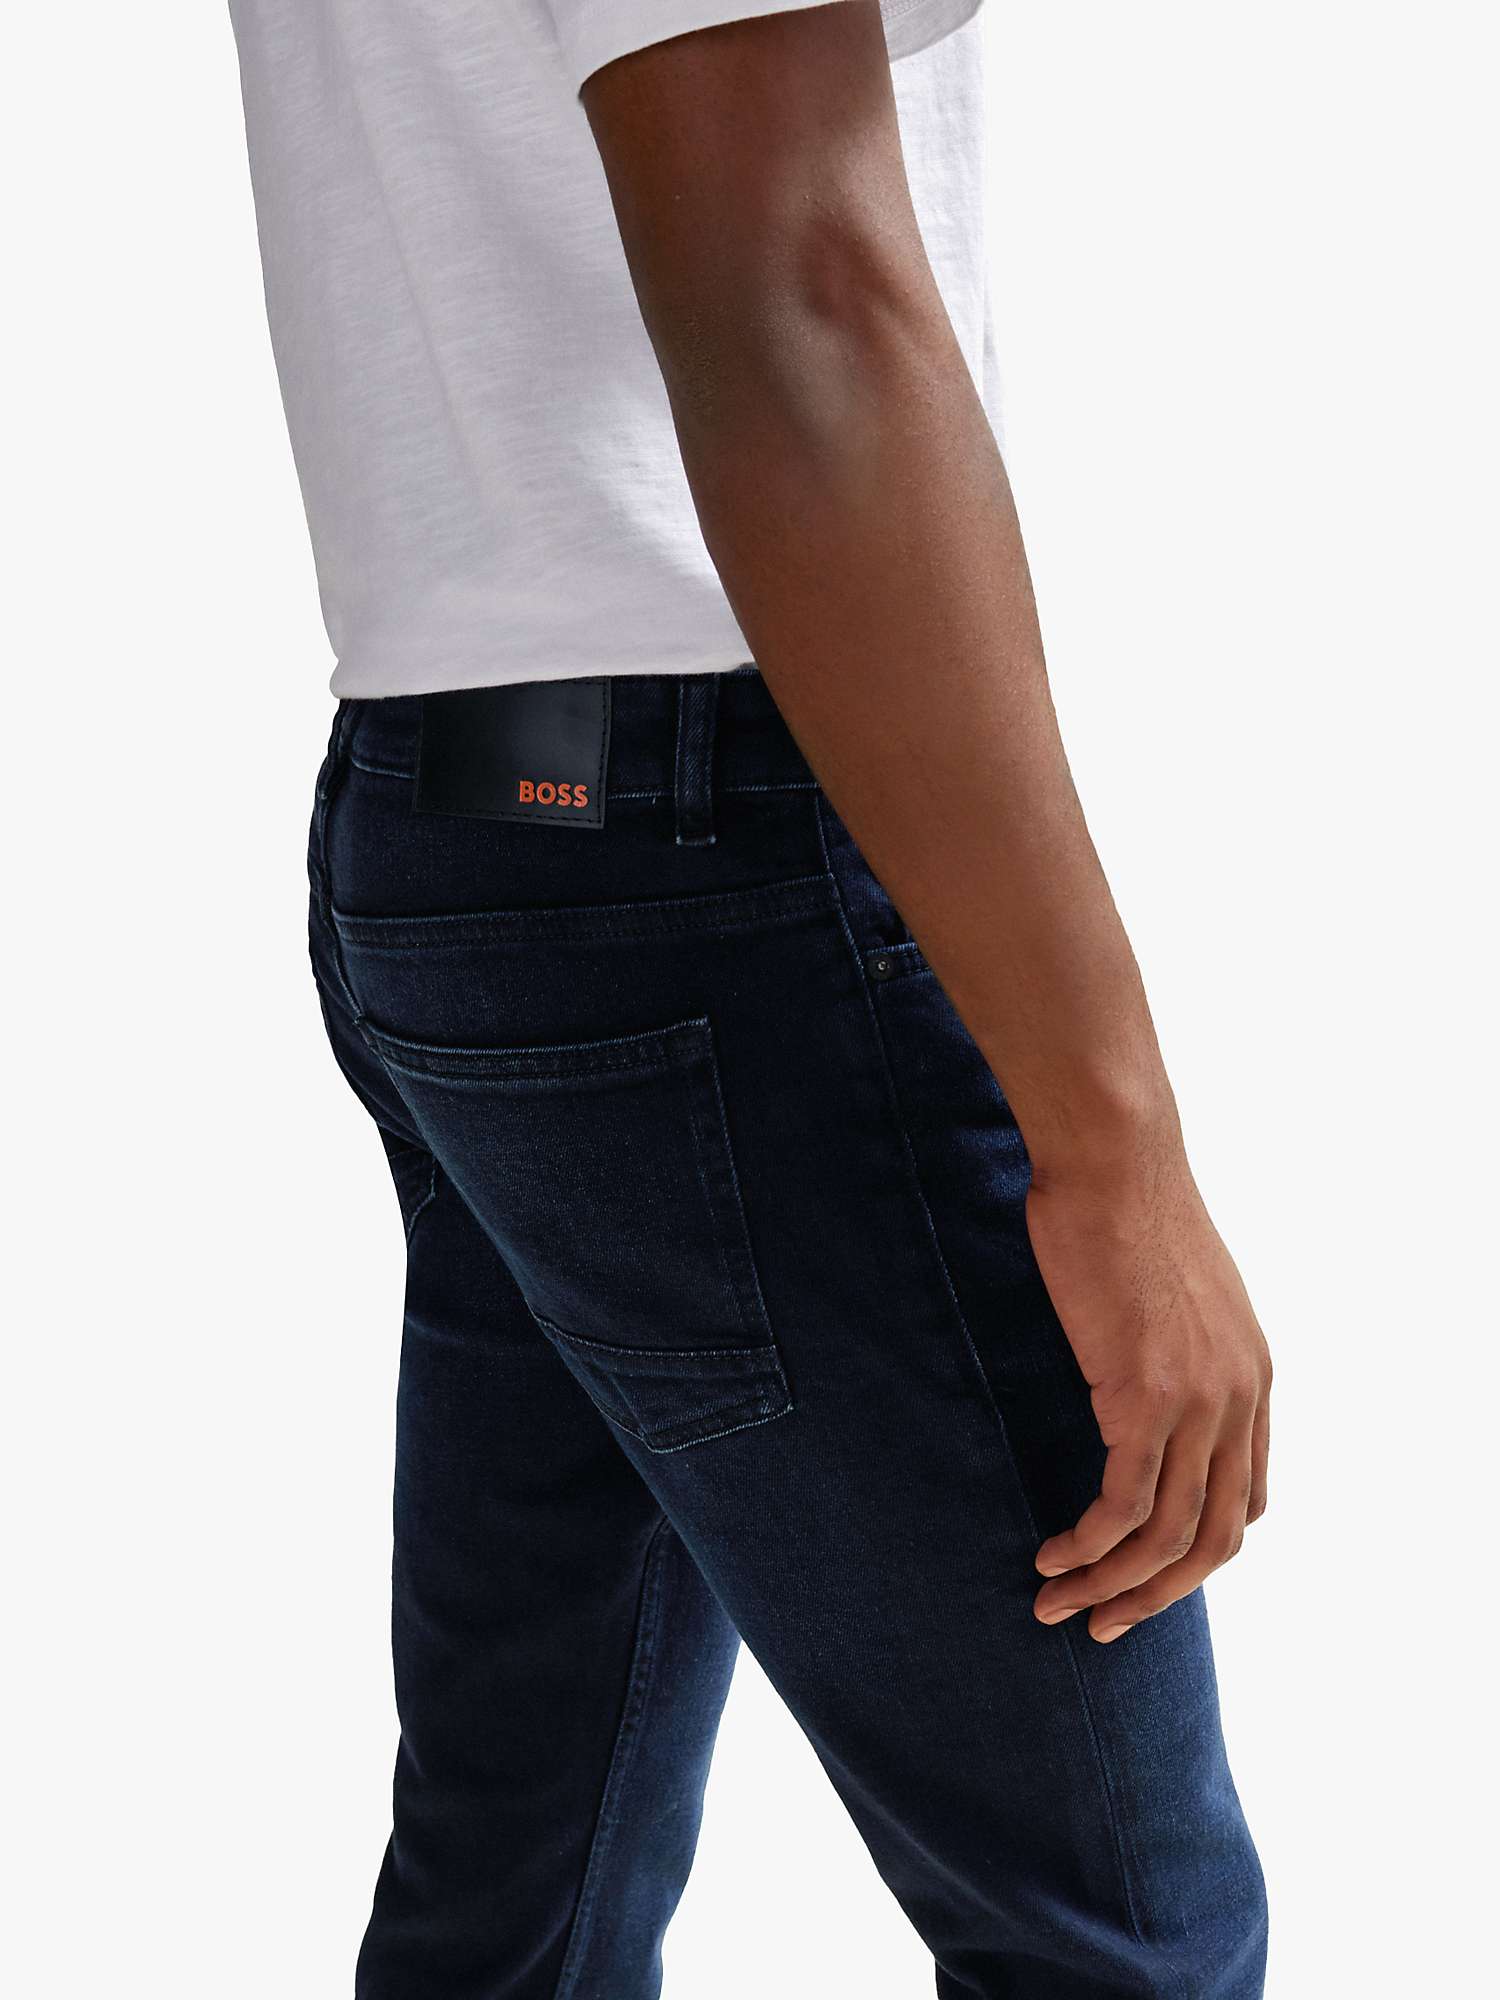 Buy BOSS Delaware Slim Fit Jeans, Dark Blue Online at johnlewis.com